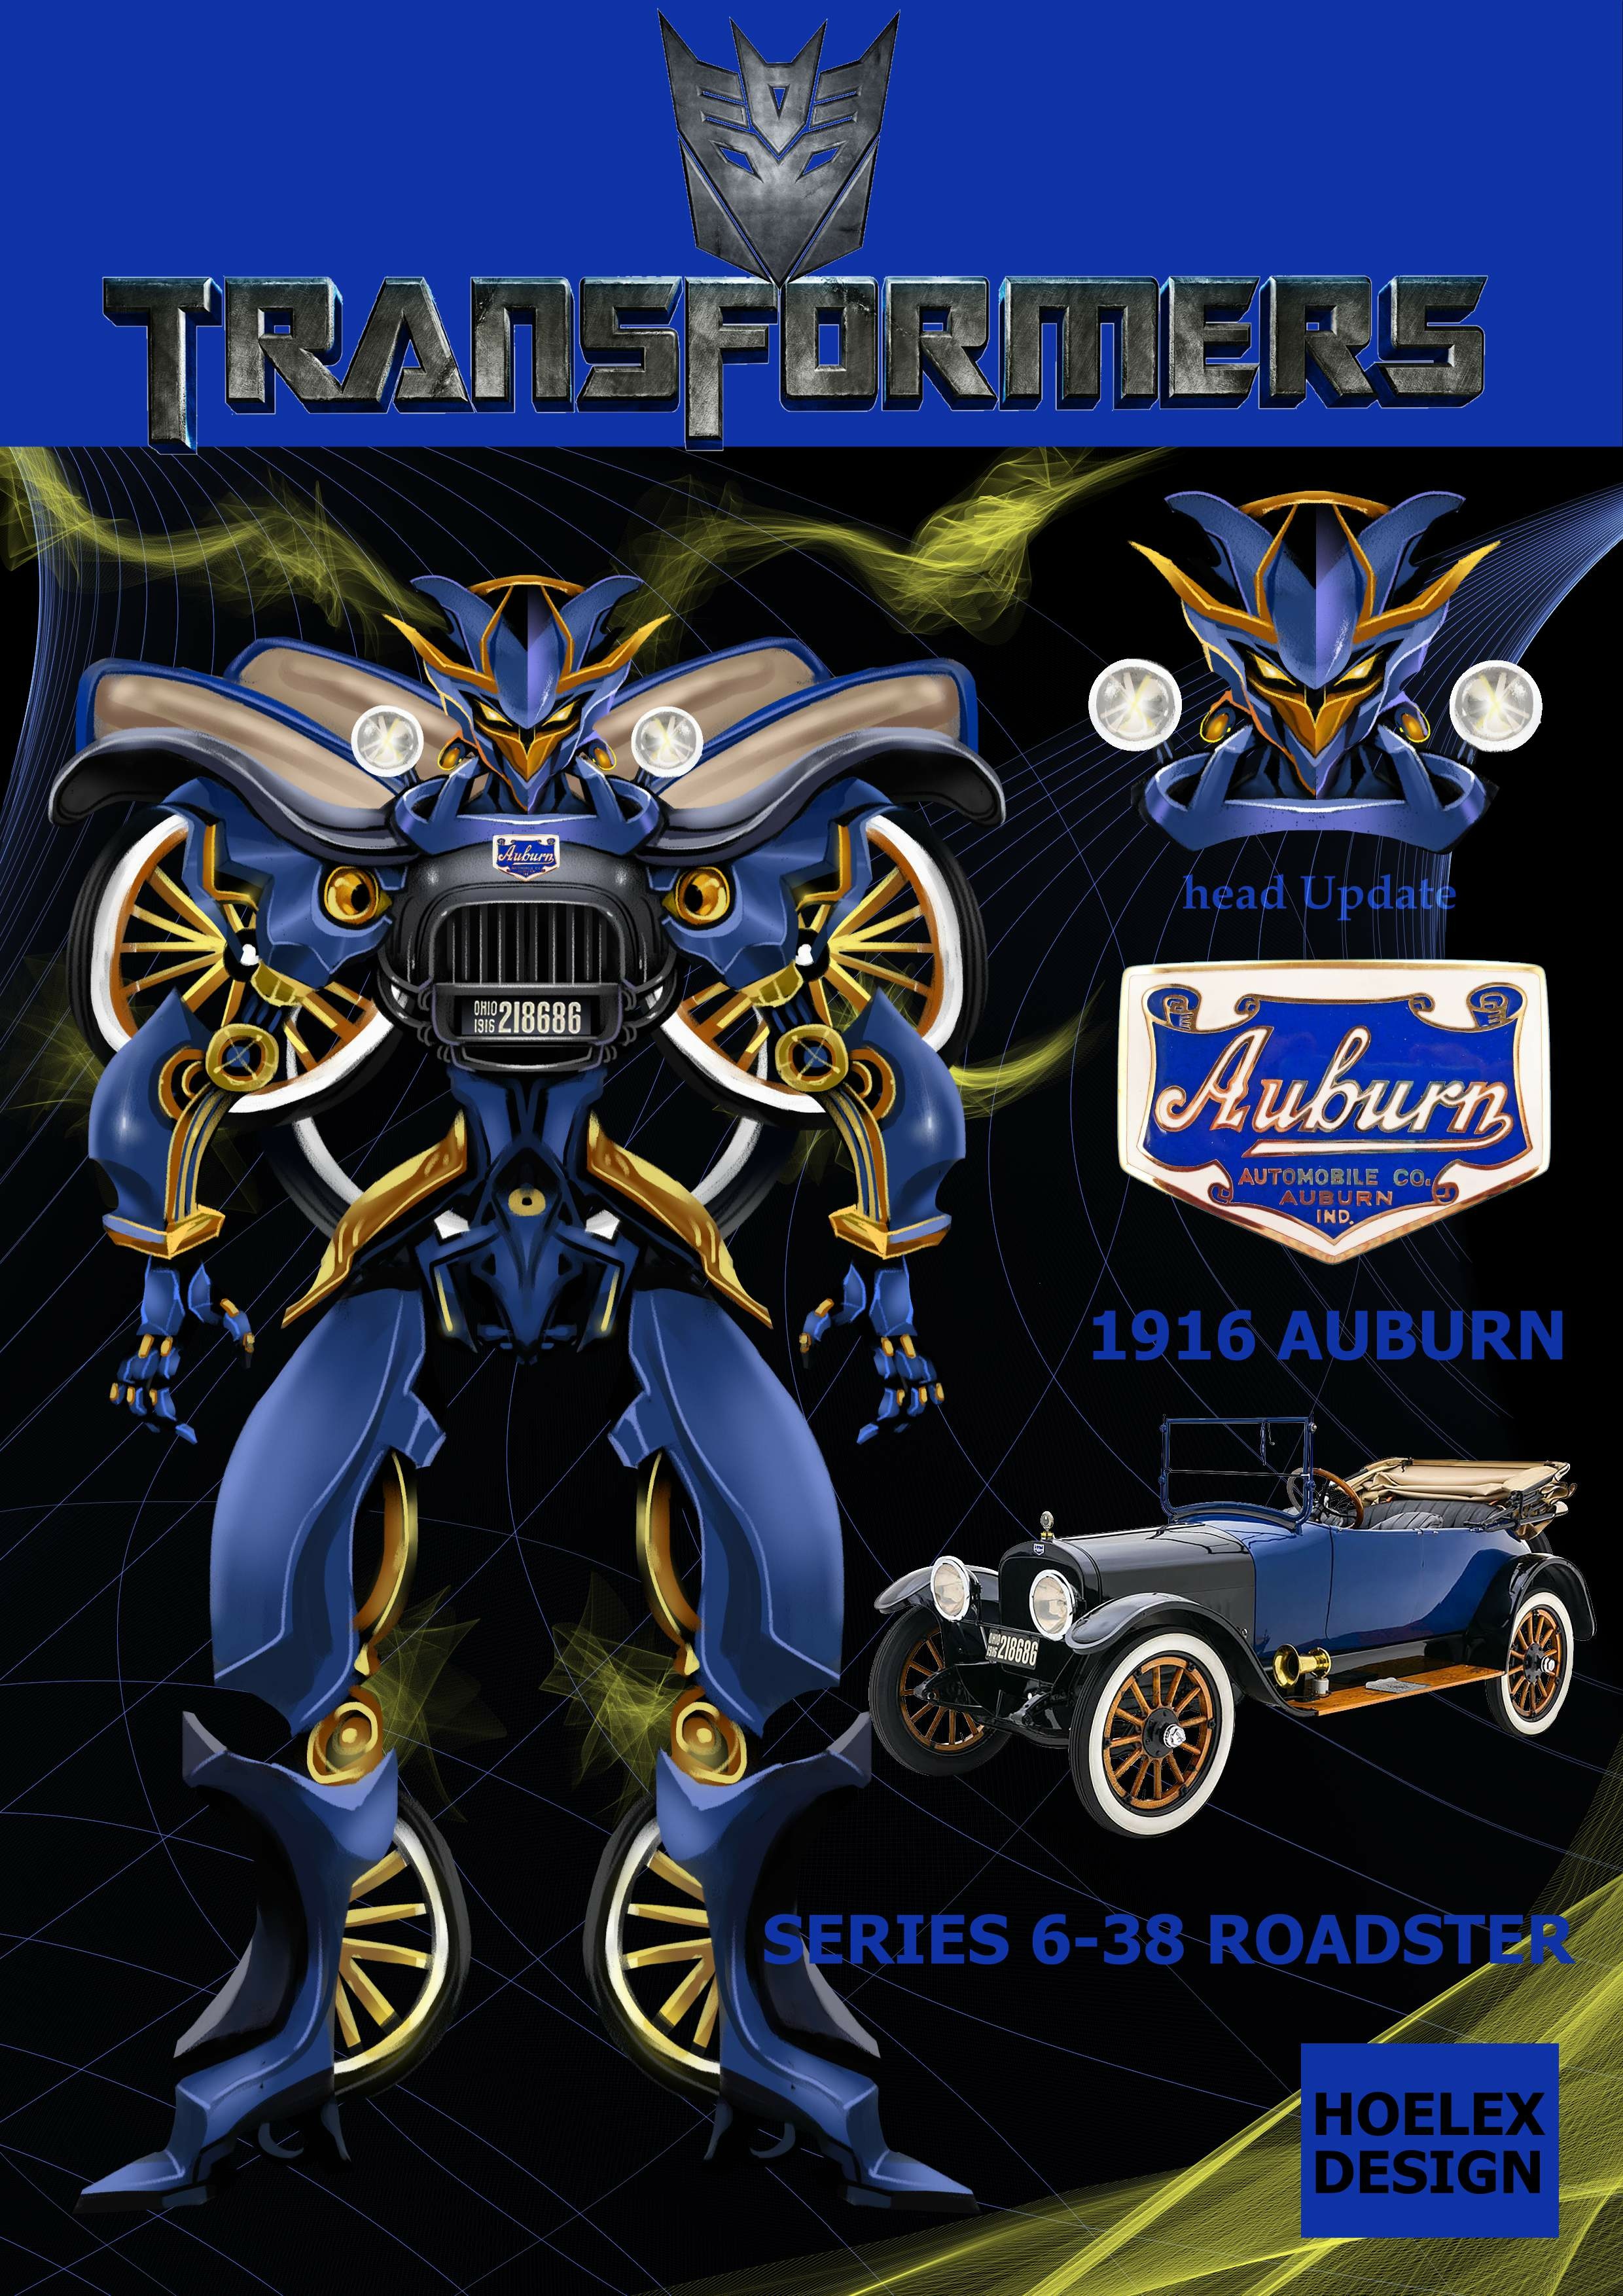 Transformers.變形金剛-1916 AUBURN SERIES 6-38 ROADSTER 奧本系列 6-38 跑車 -hoelex(背景).jpg